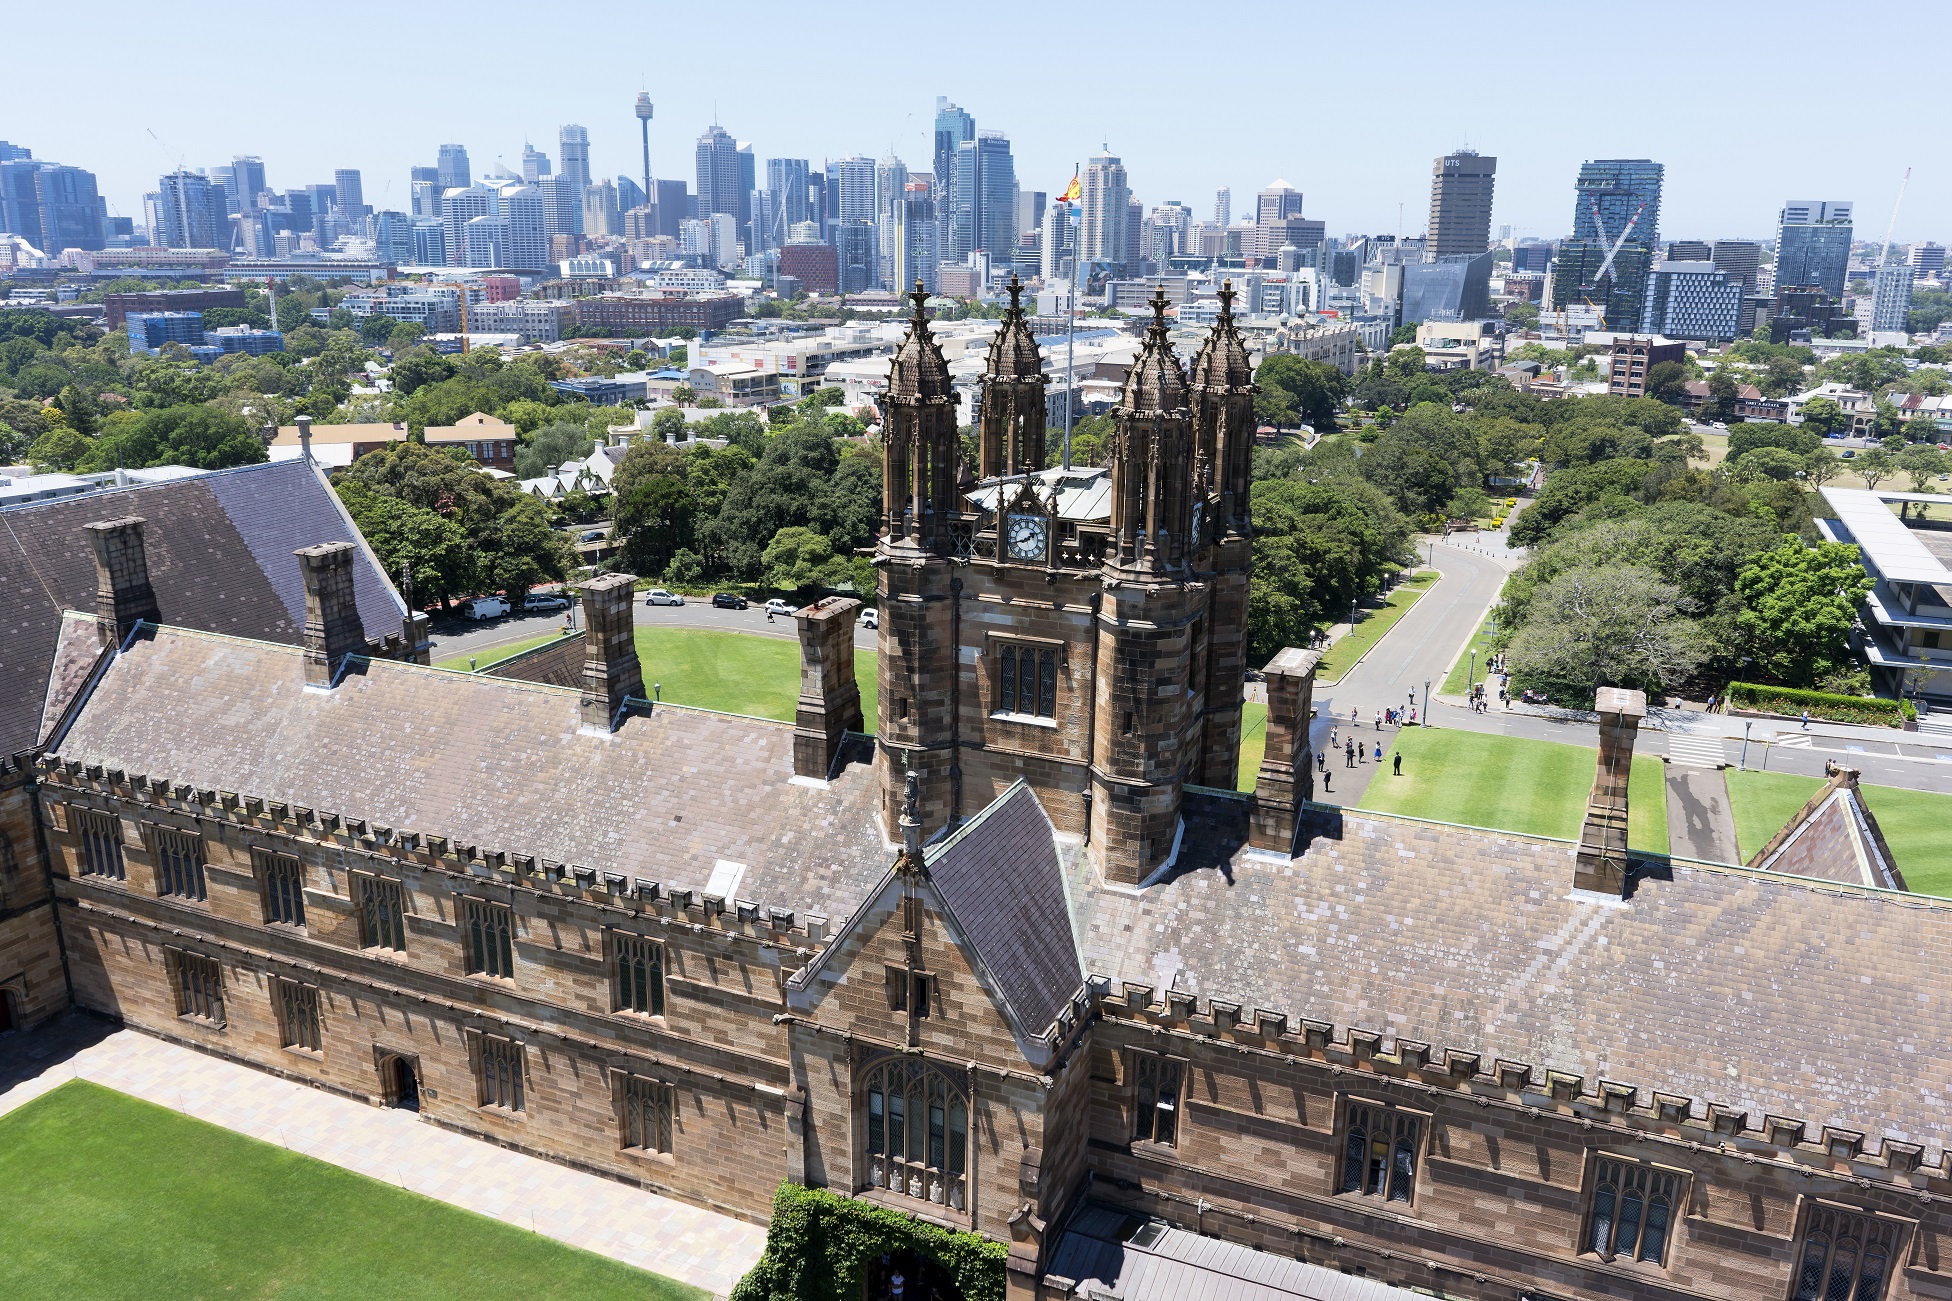 best universities for creative writing australia